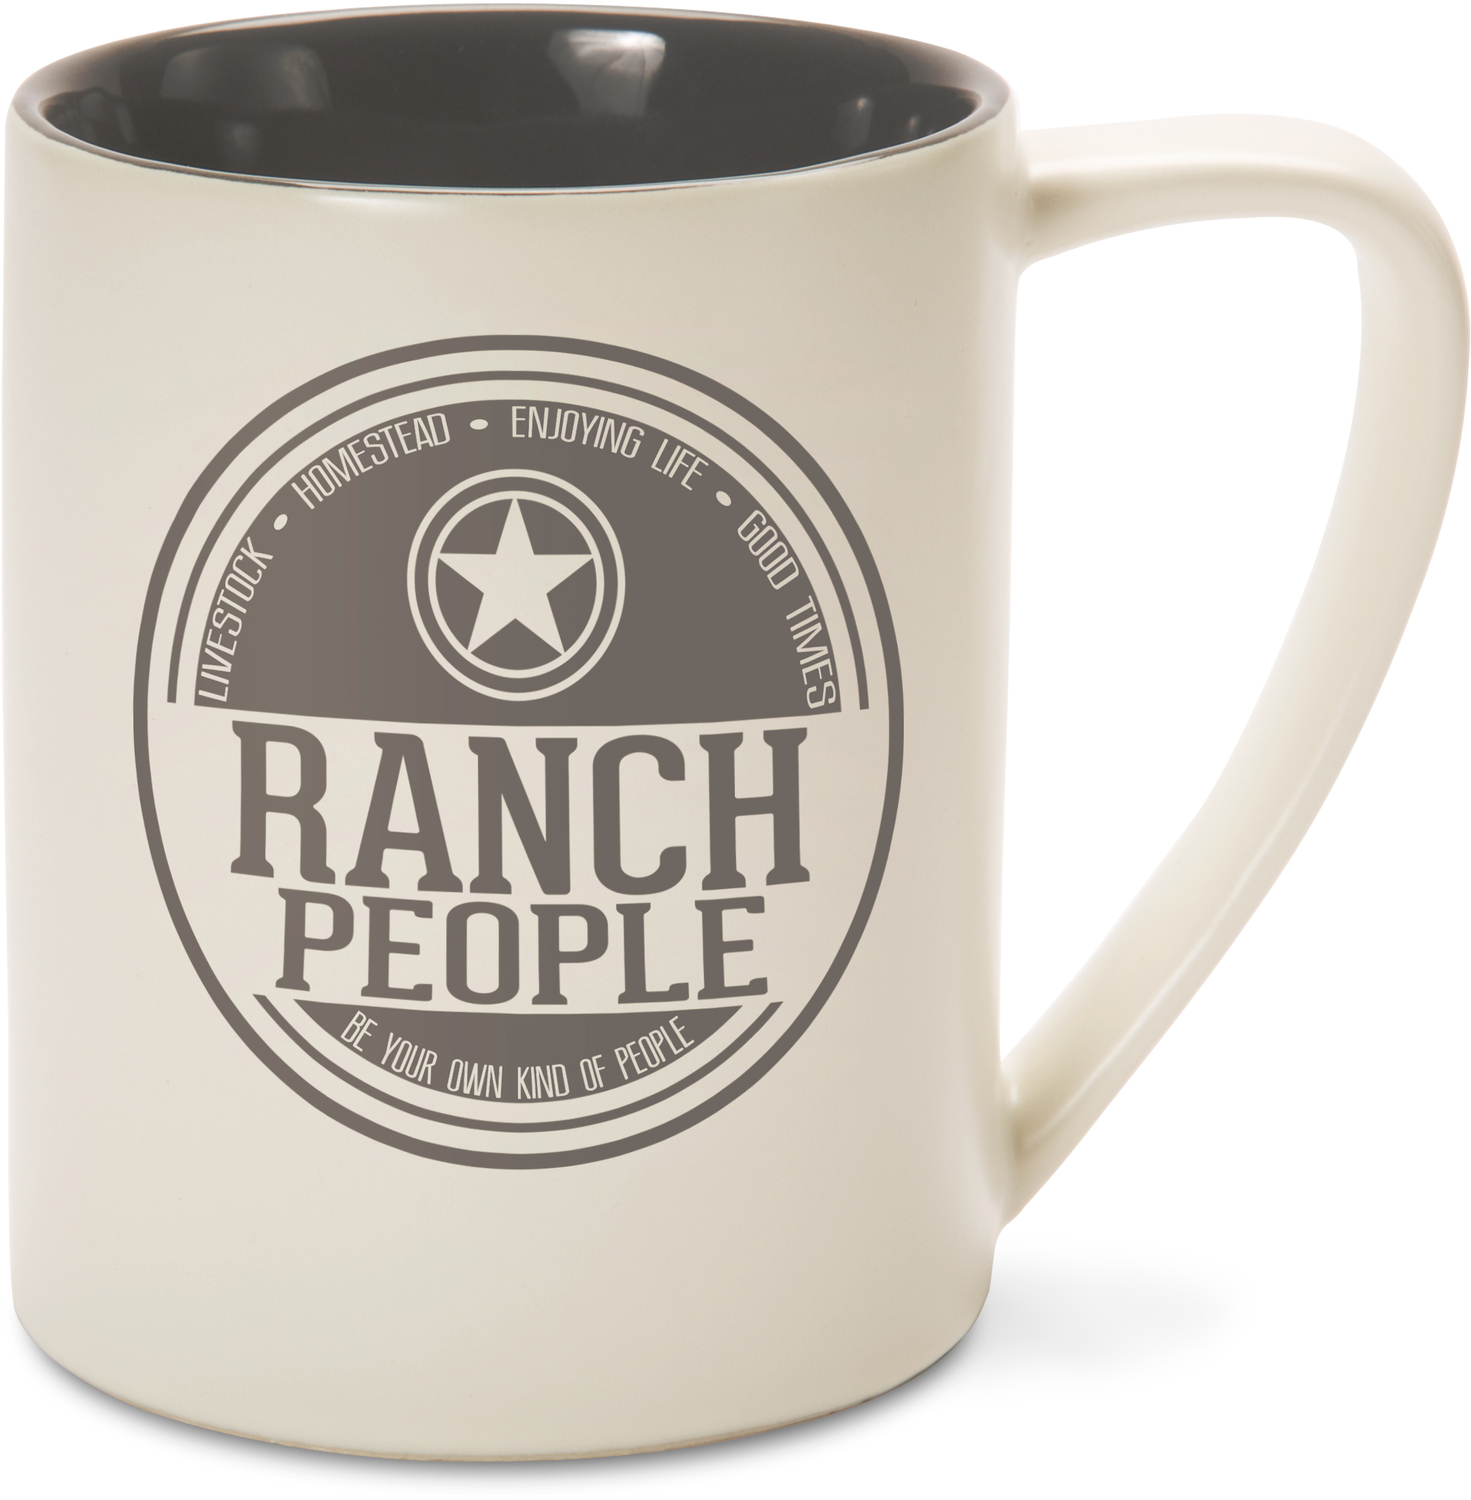 Ranch People by We People - Ranch People - 18 oz Mug